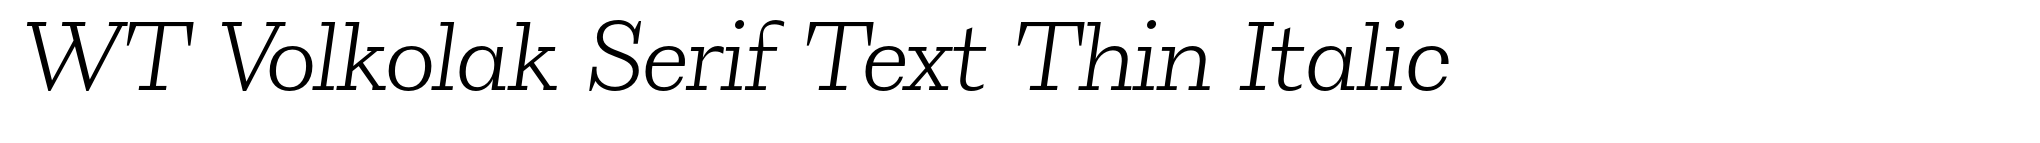 WT Volkolak Serif Text Thin Italic image